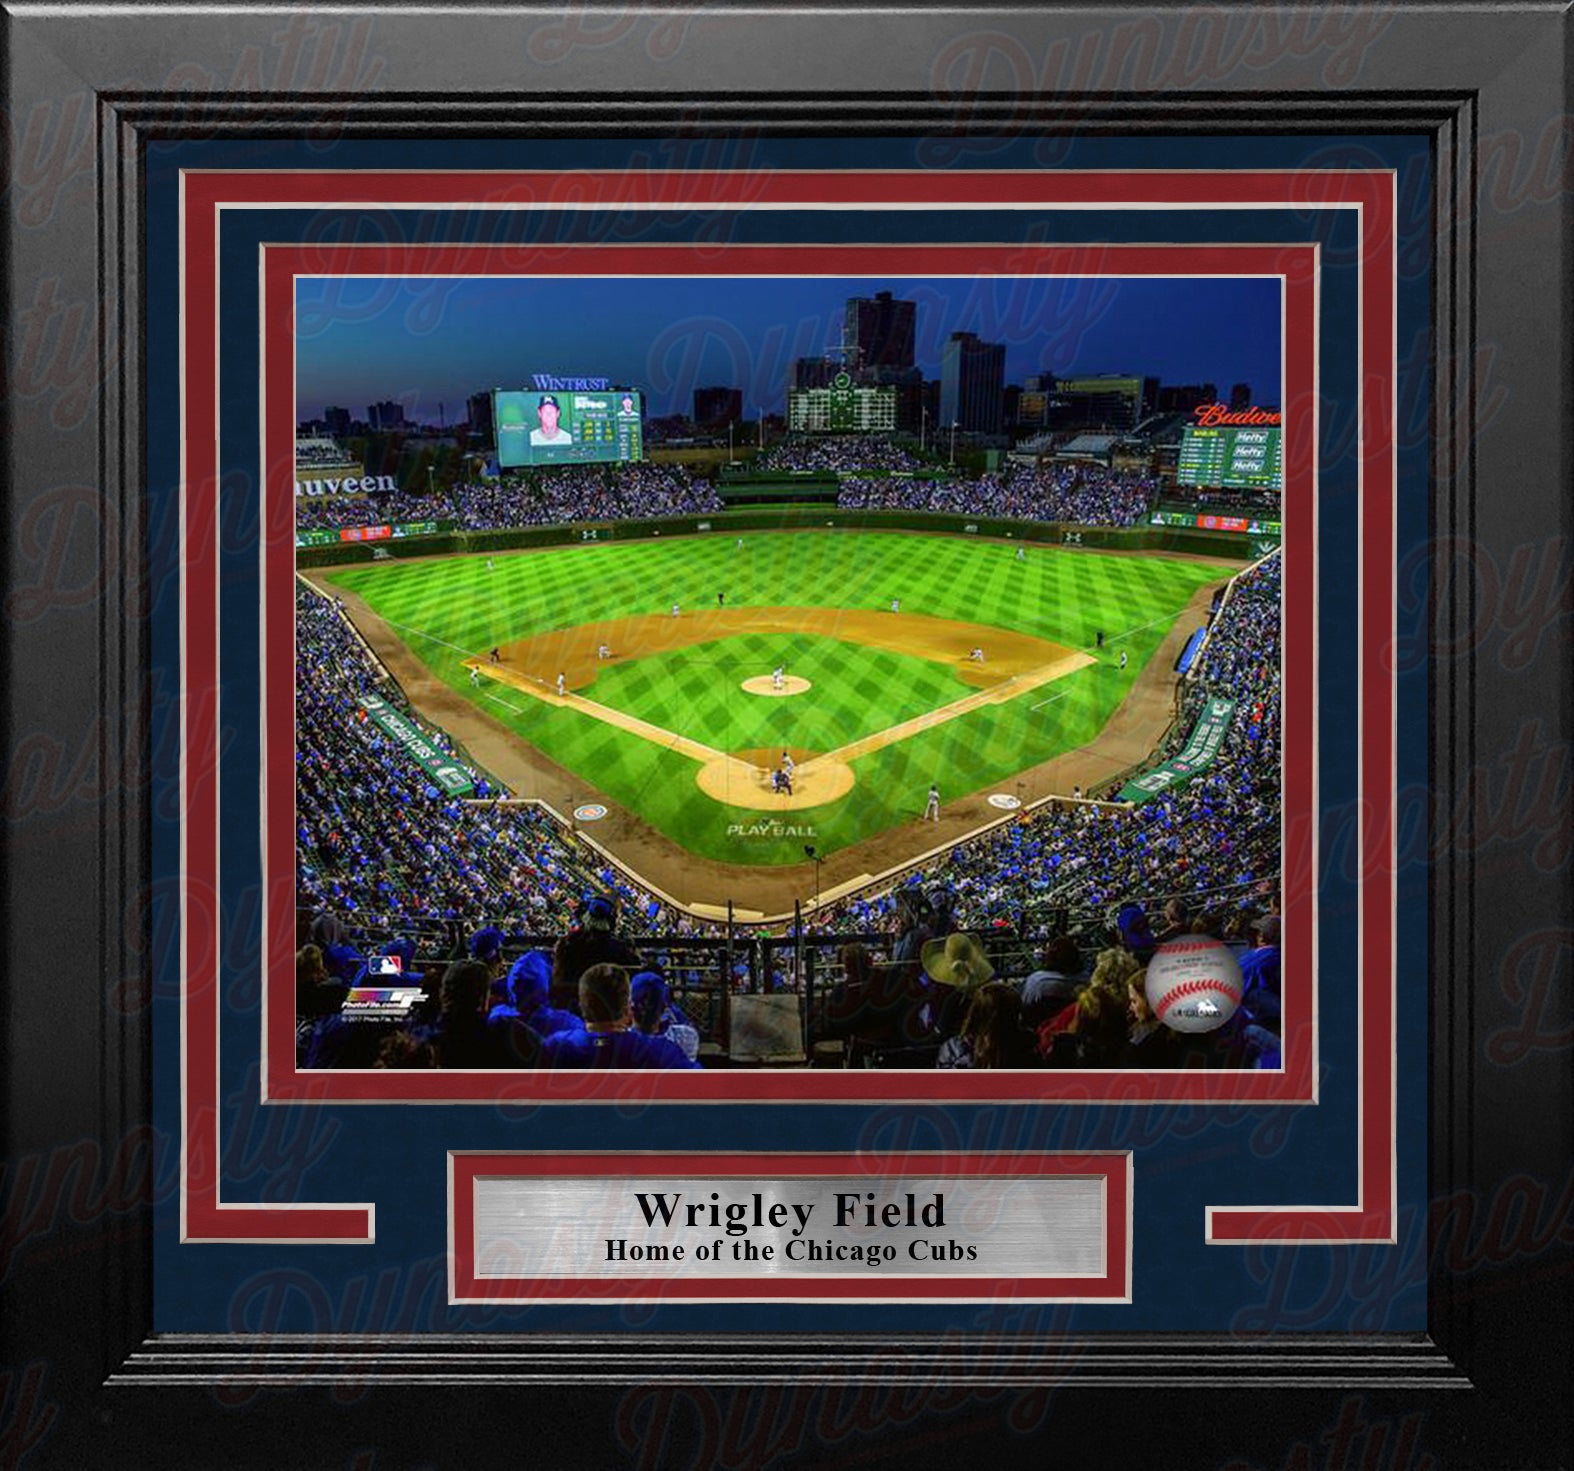 Chicago Cubs Wrigley Field 8" x 10" Framed Baseball Stadium Photo - Dynasty Sports & Framing 